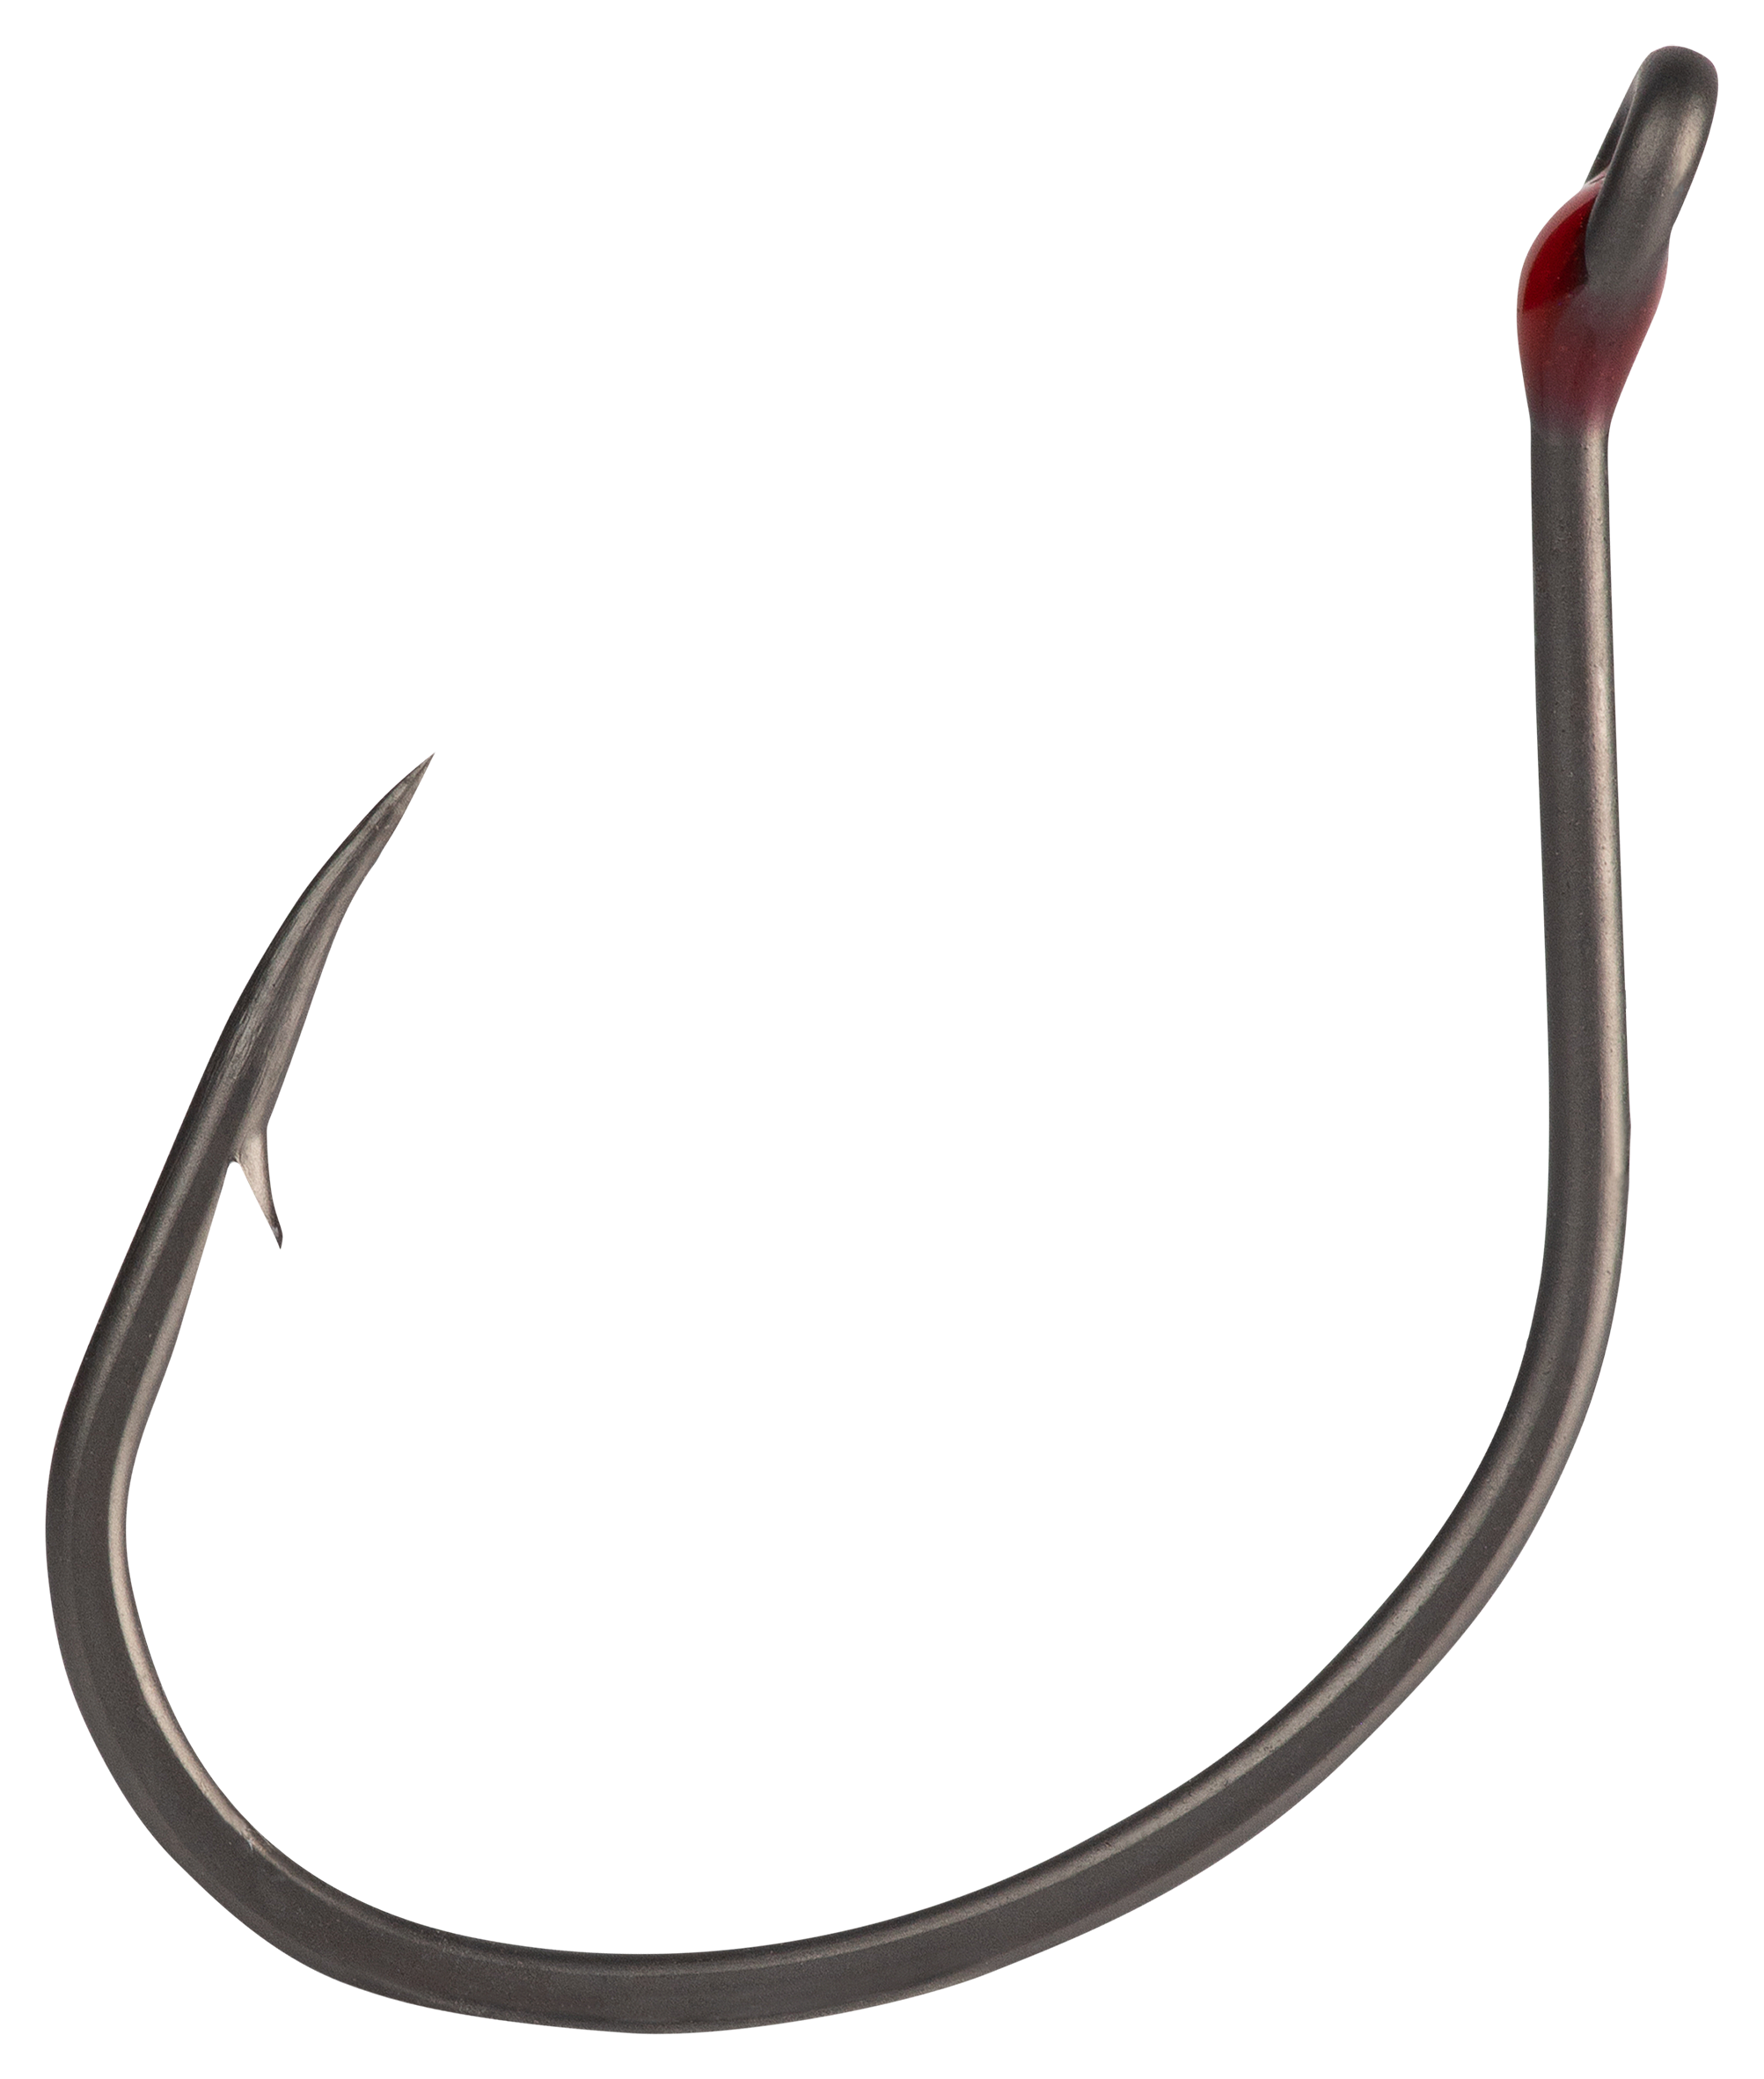 Berkley® Fusion19™ Drop Shot Hooks Fishing Hooks 